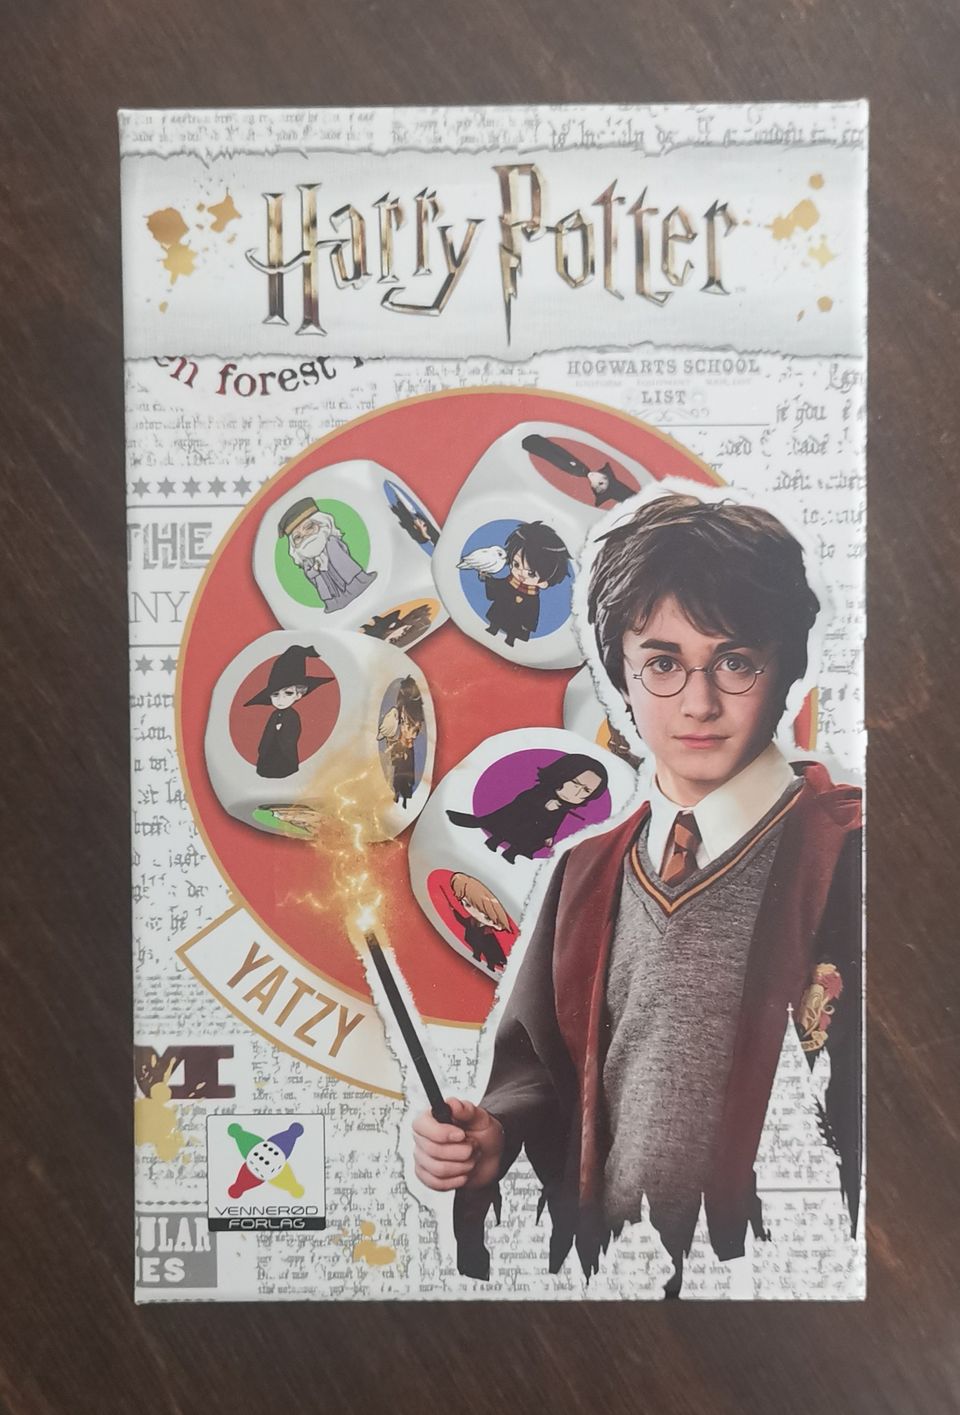 Yatzy-peli Harry Potter